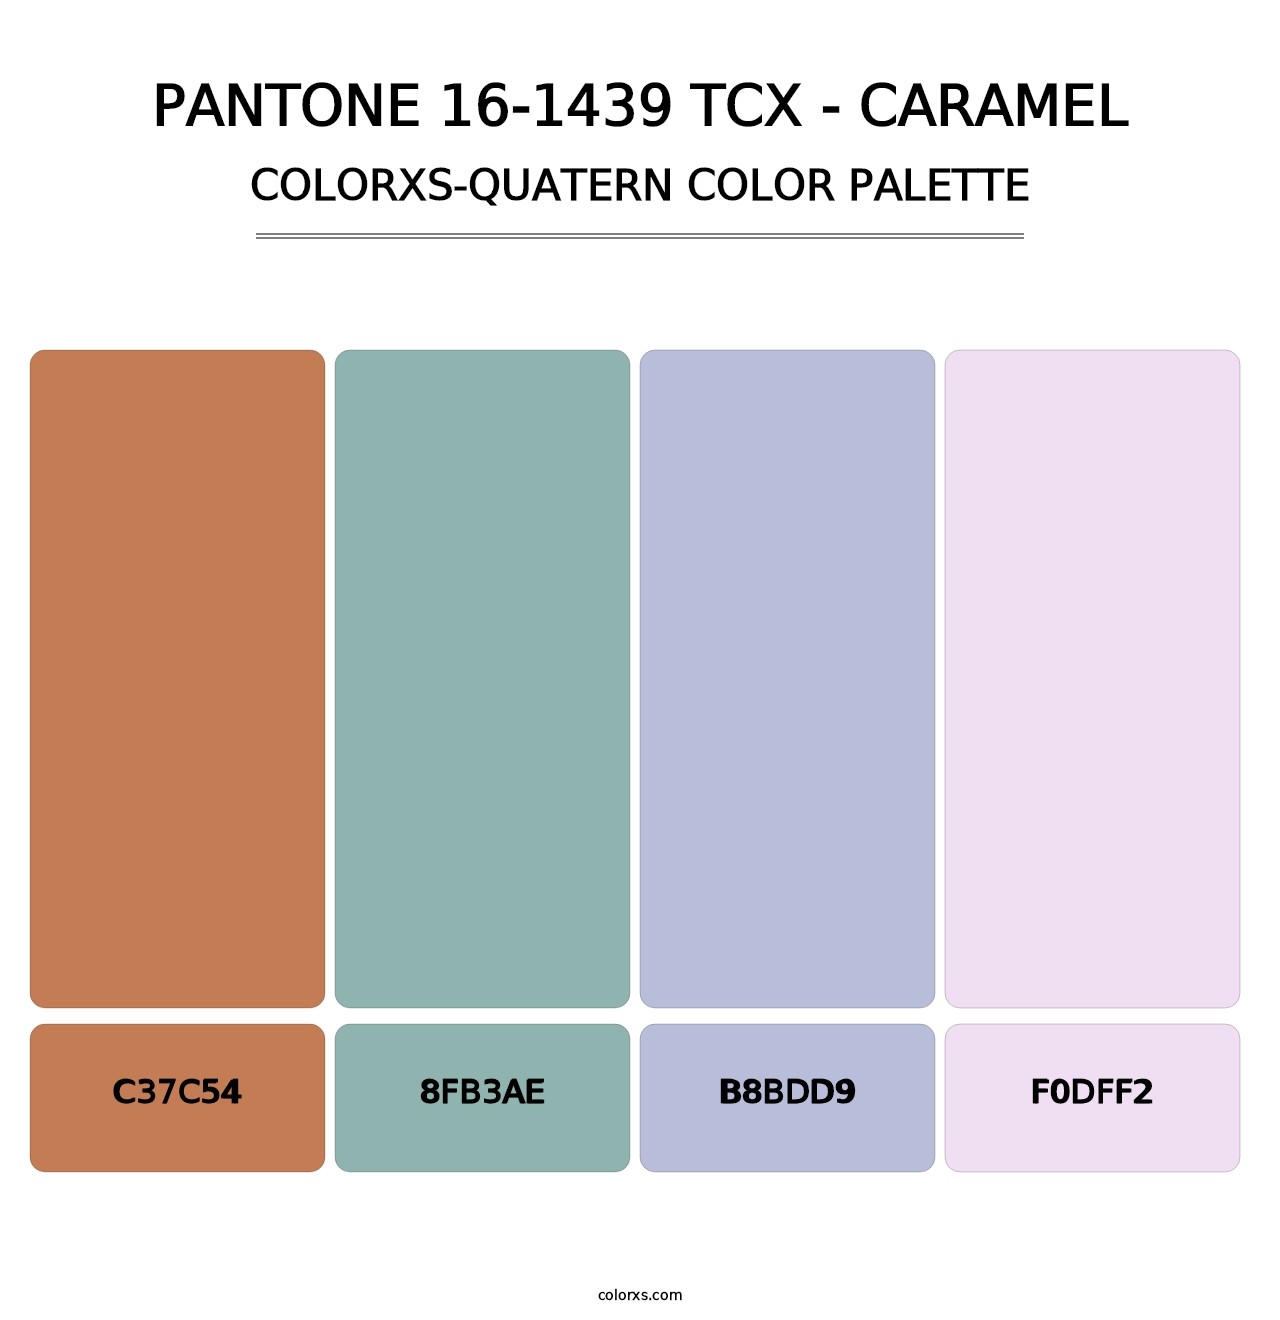 PANTONE 16-1439 TCX - Caramel - Colorxs Quatern Palette